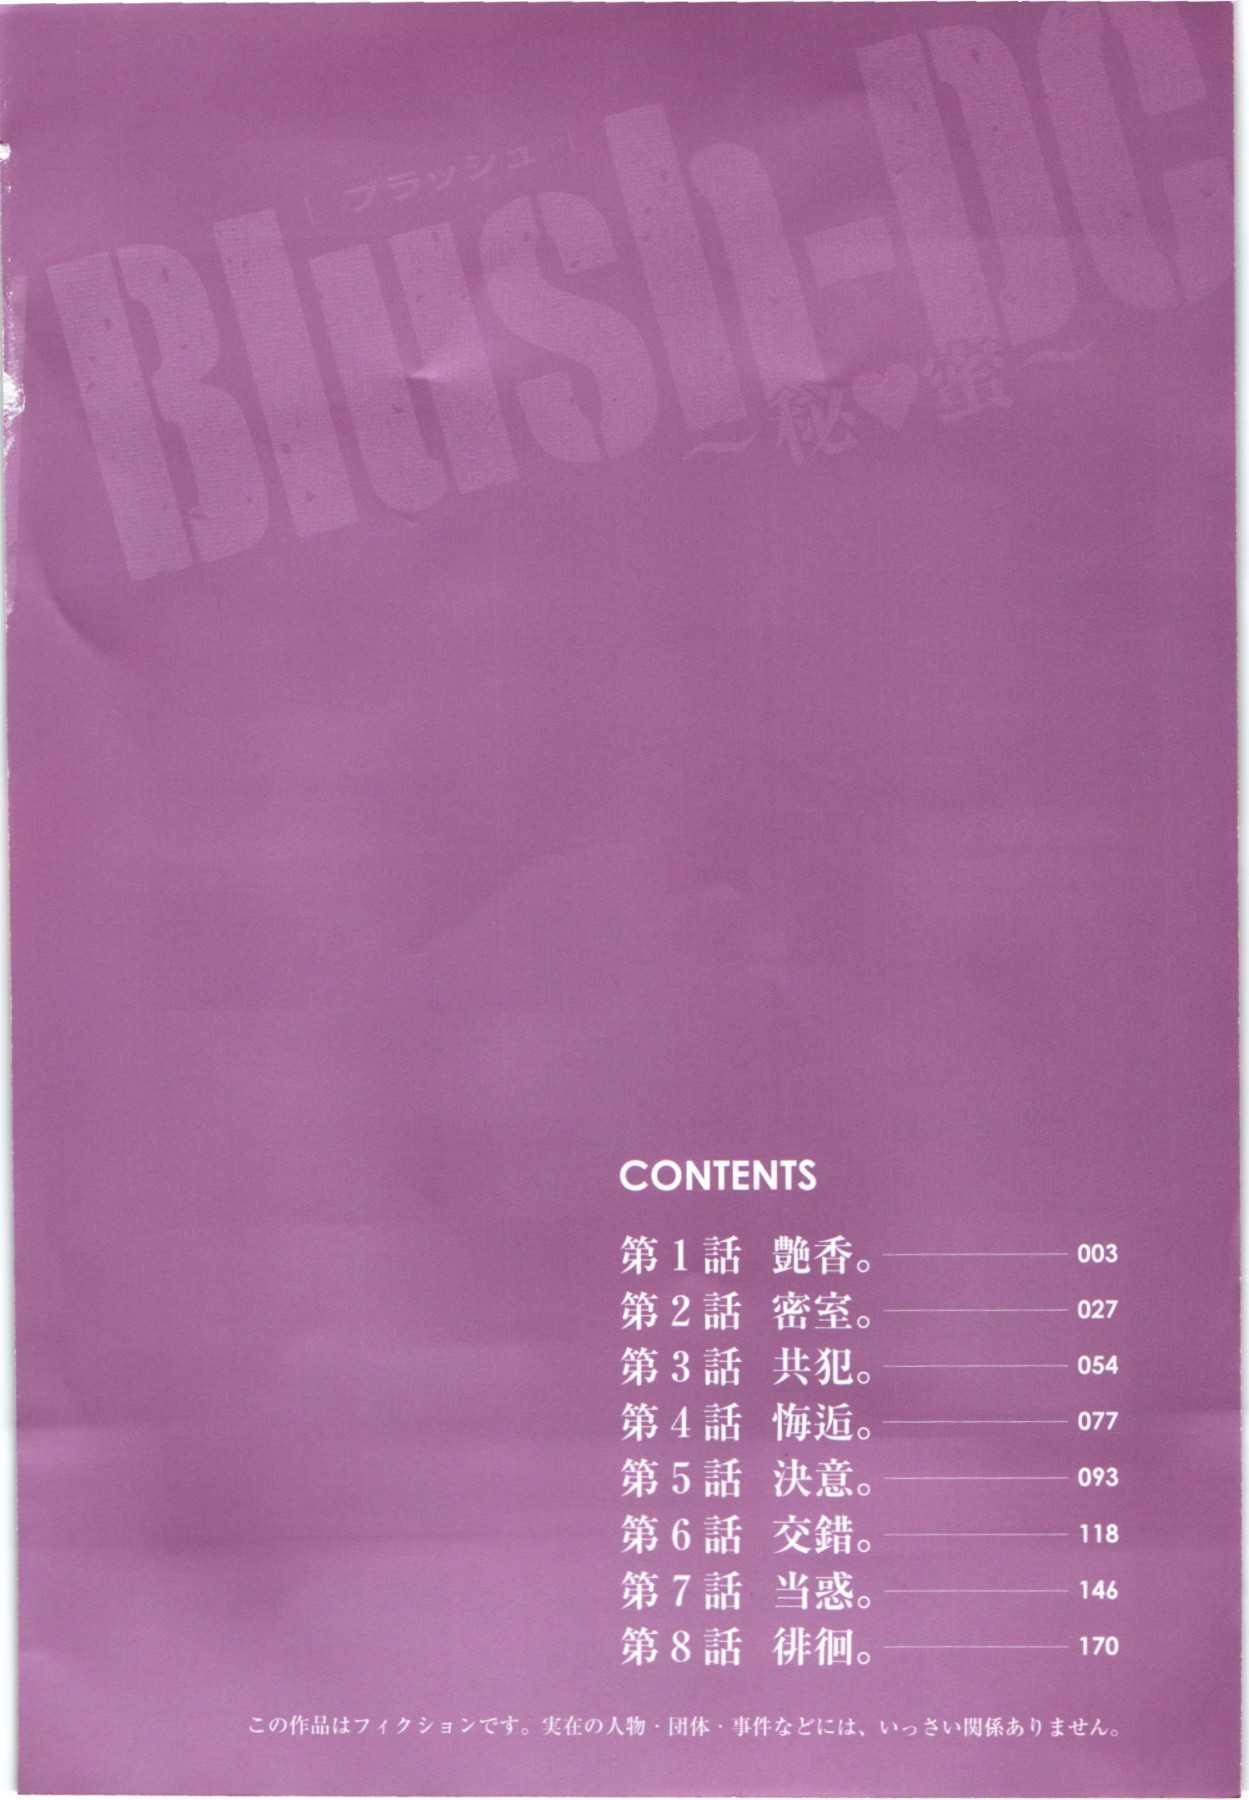 [Maya Miyazaki] /Blush-DC Himitsu Vol.01 [宮崎摩耶] /Blush-DC ～秘・蜜～ Vol.01